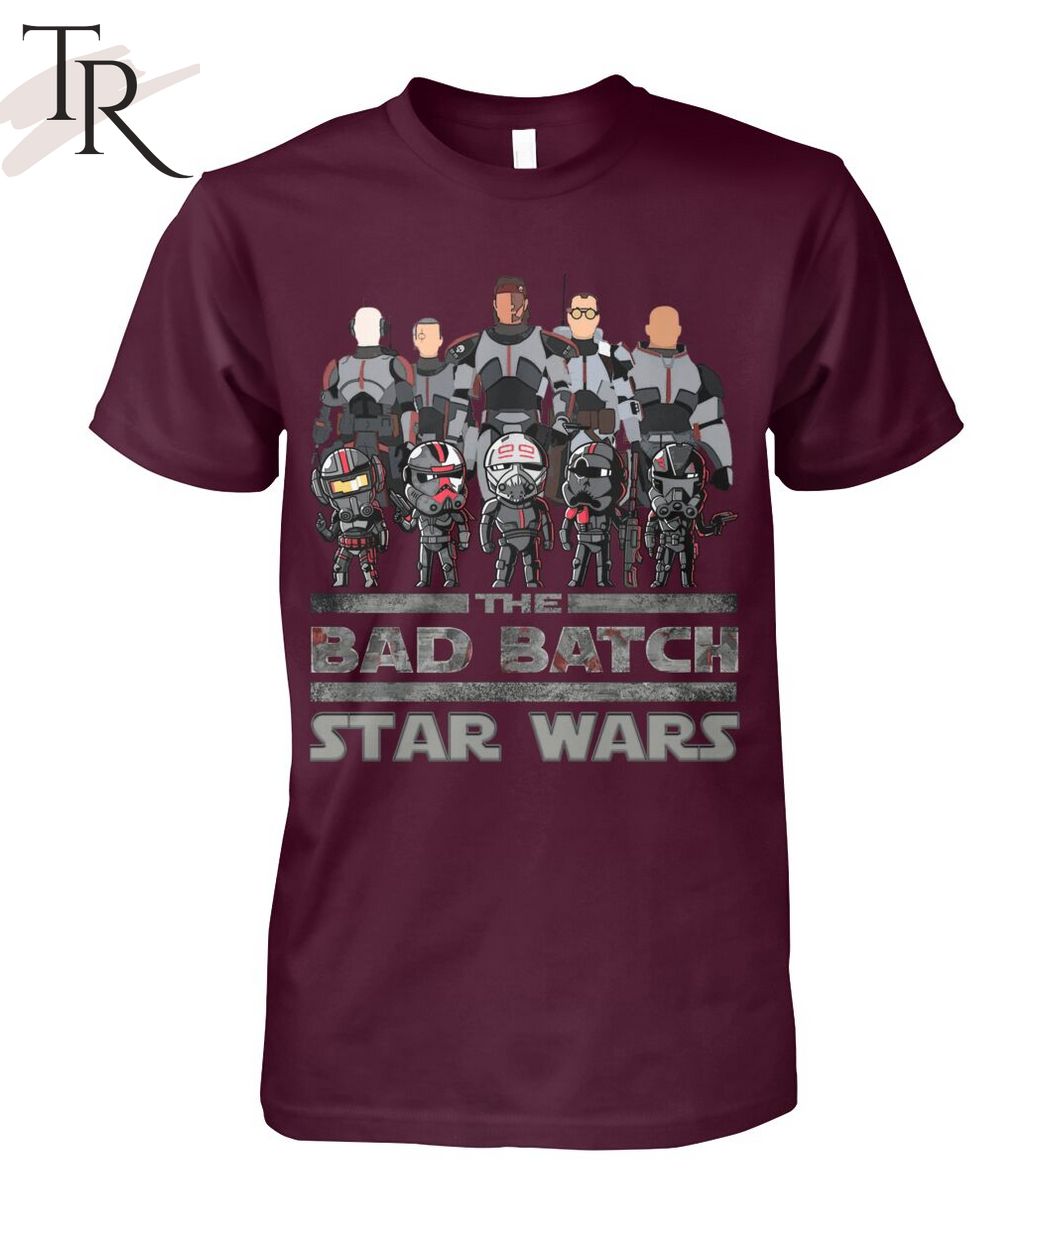 The Bad Batch Star Wars T-Shirt